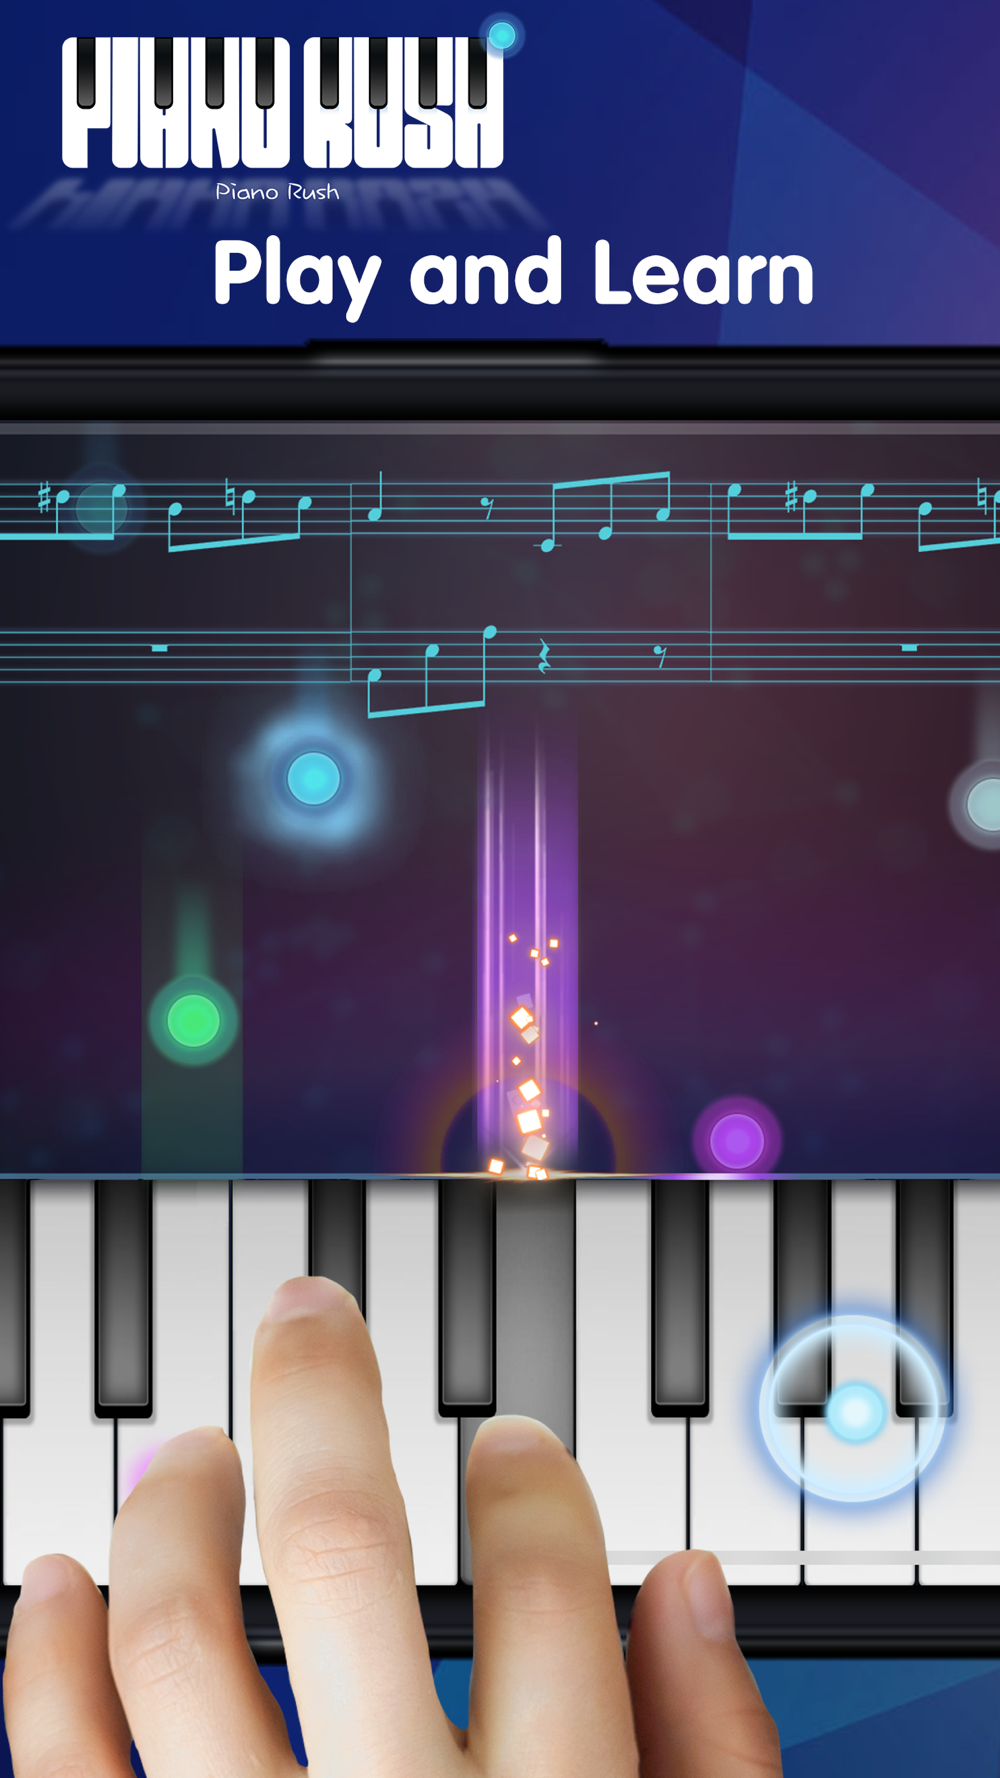 Piano Rush Piano Games Free Download App For Iphone Steprimo Com